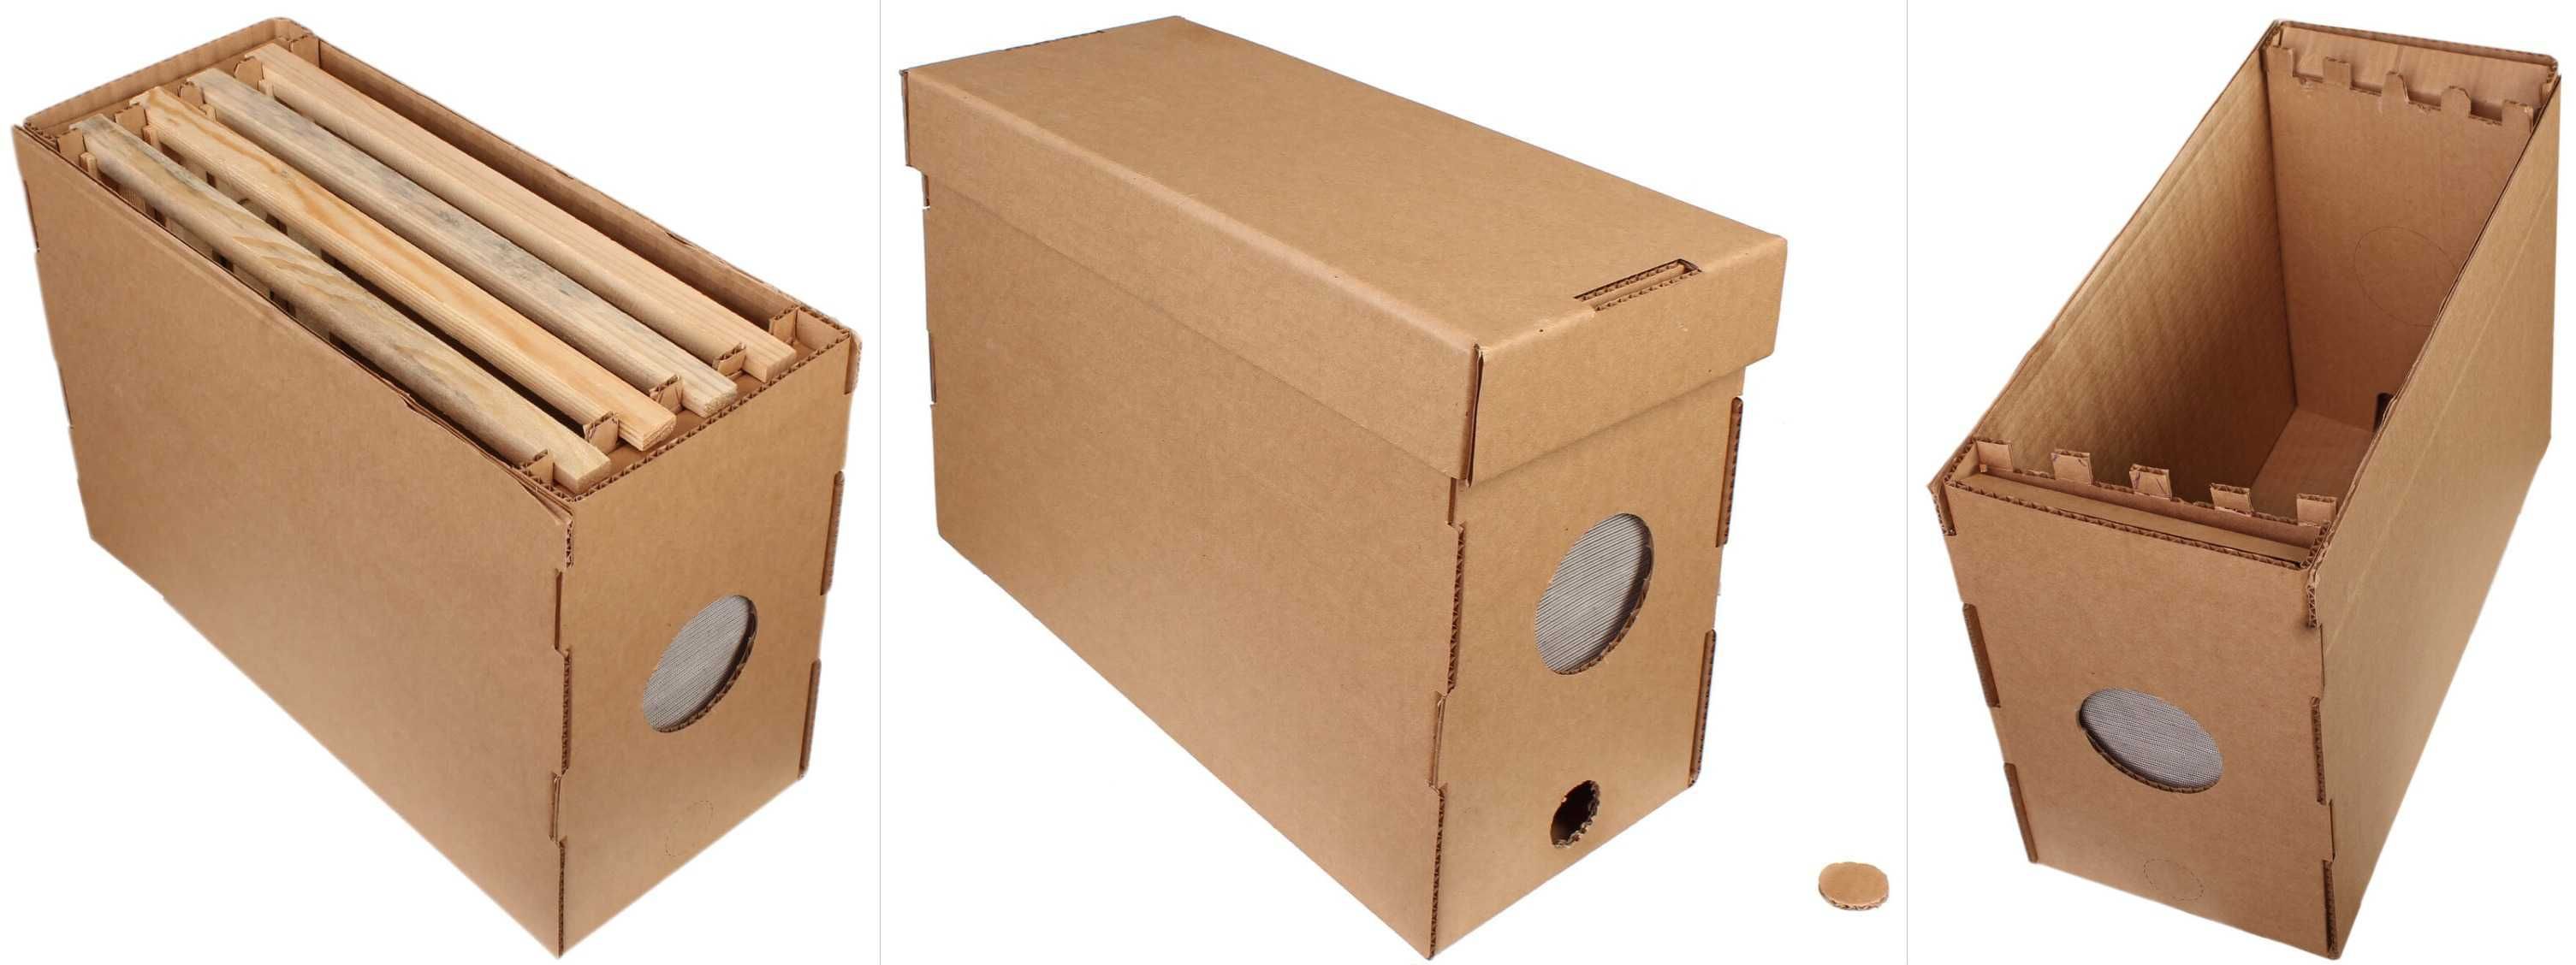 Коробка ящик для пчелопакетов 5 рамок картонная